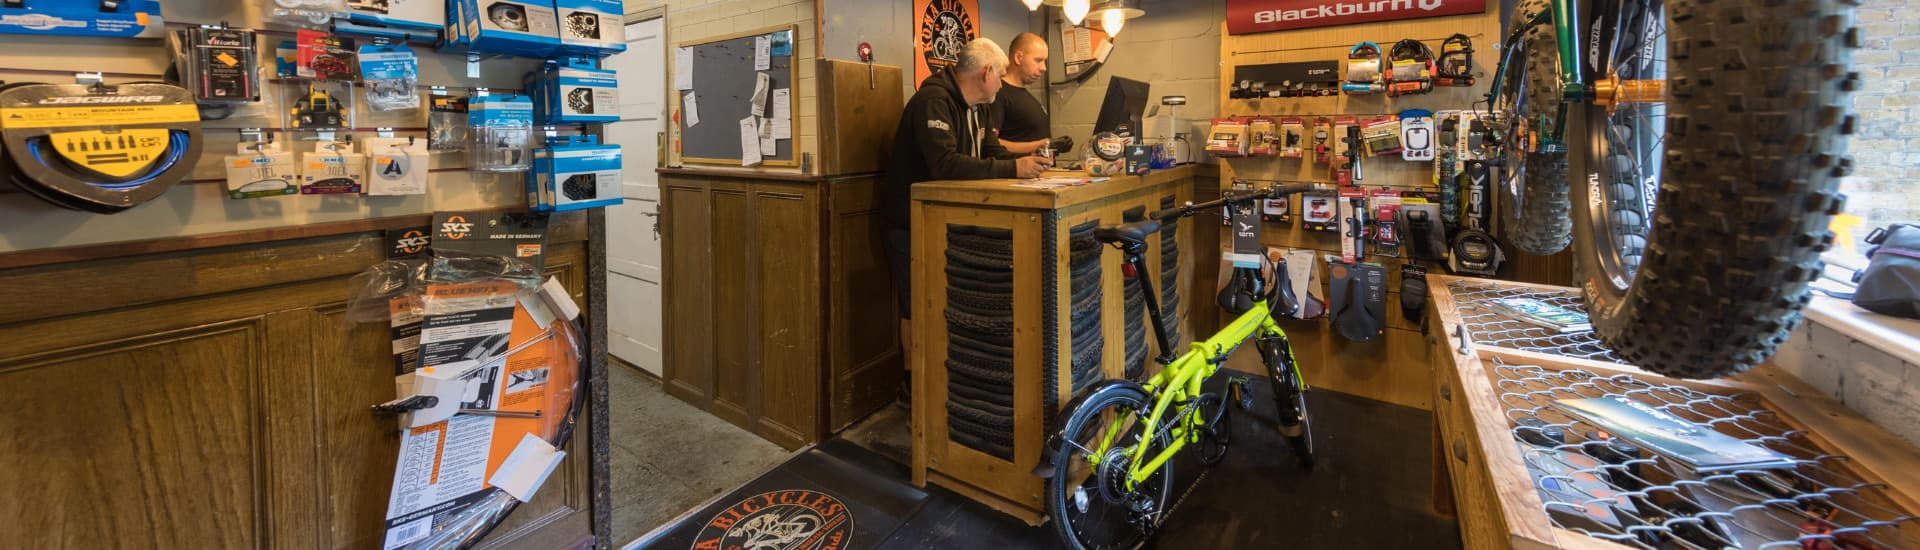 Local Business Spotlight: Rusty Bike